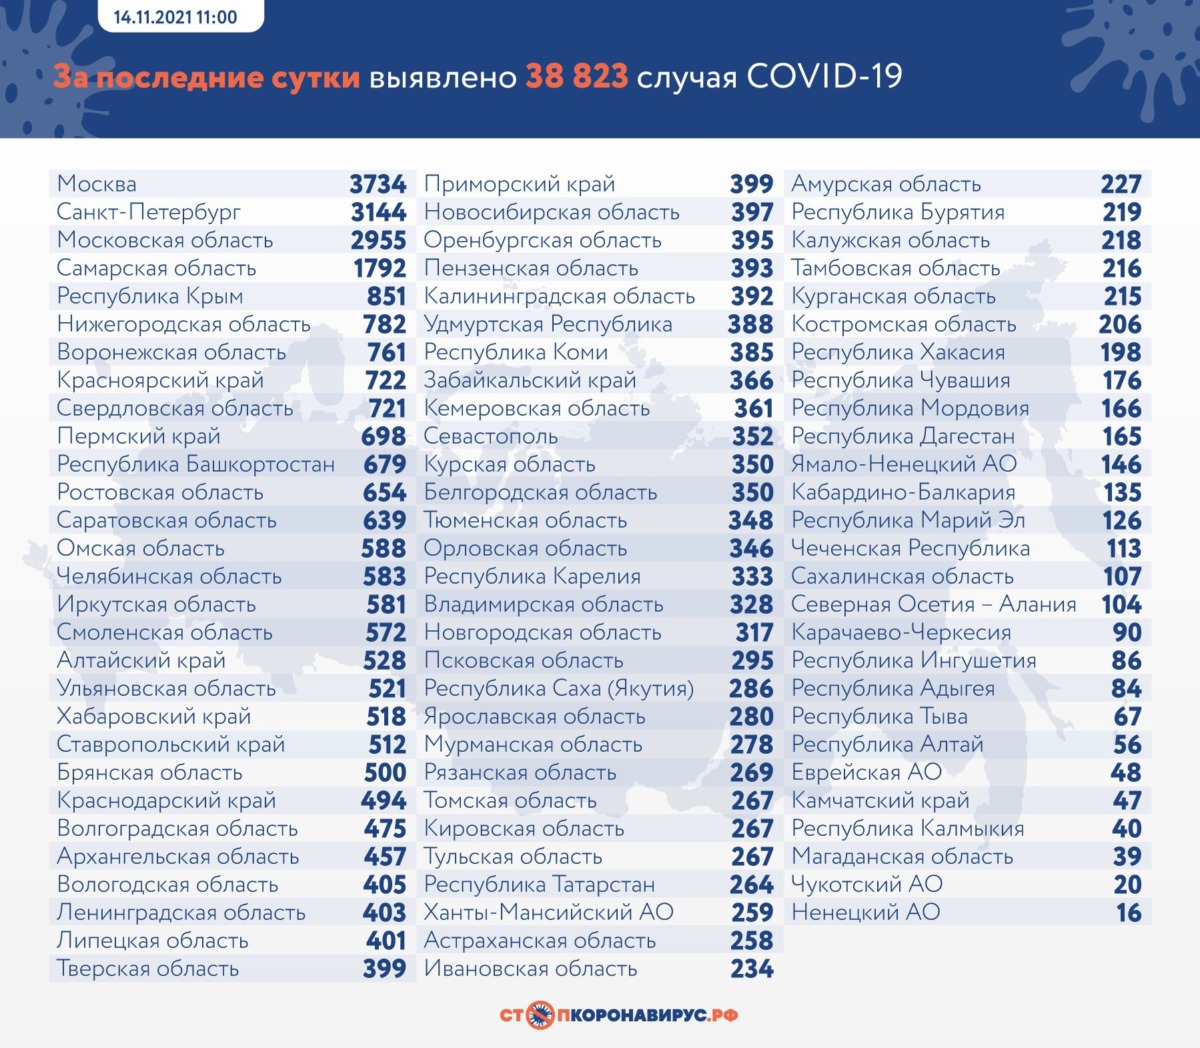 Статистика коронавируса в России на 14 ноября